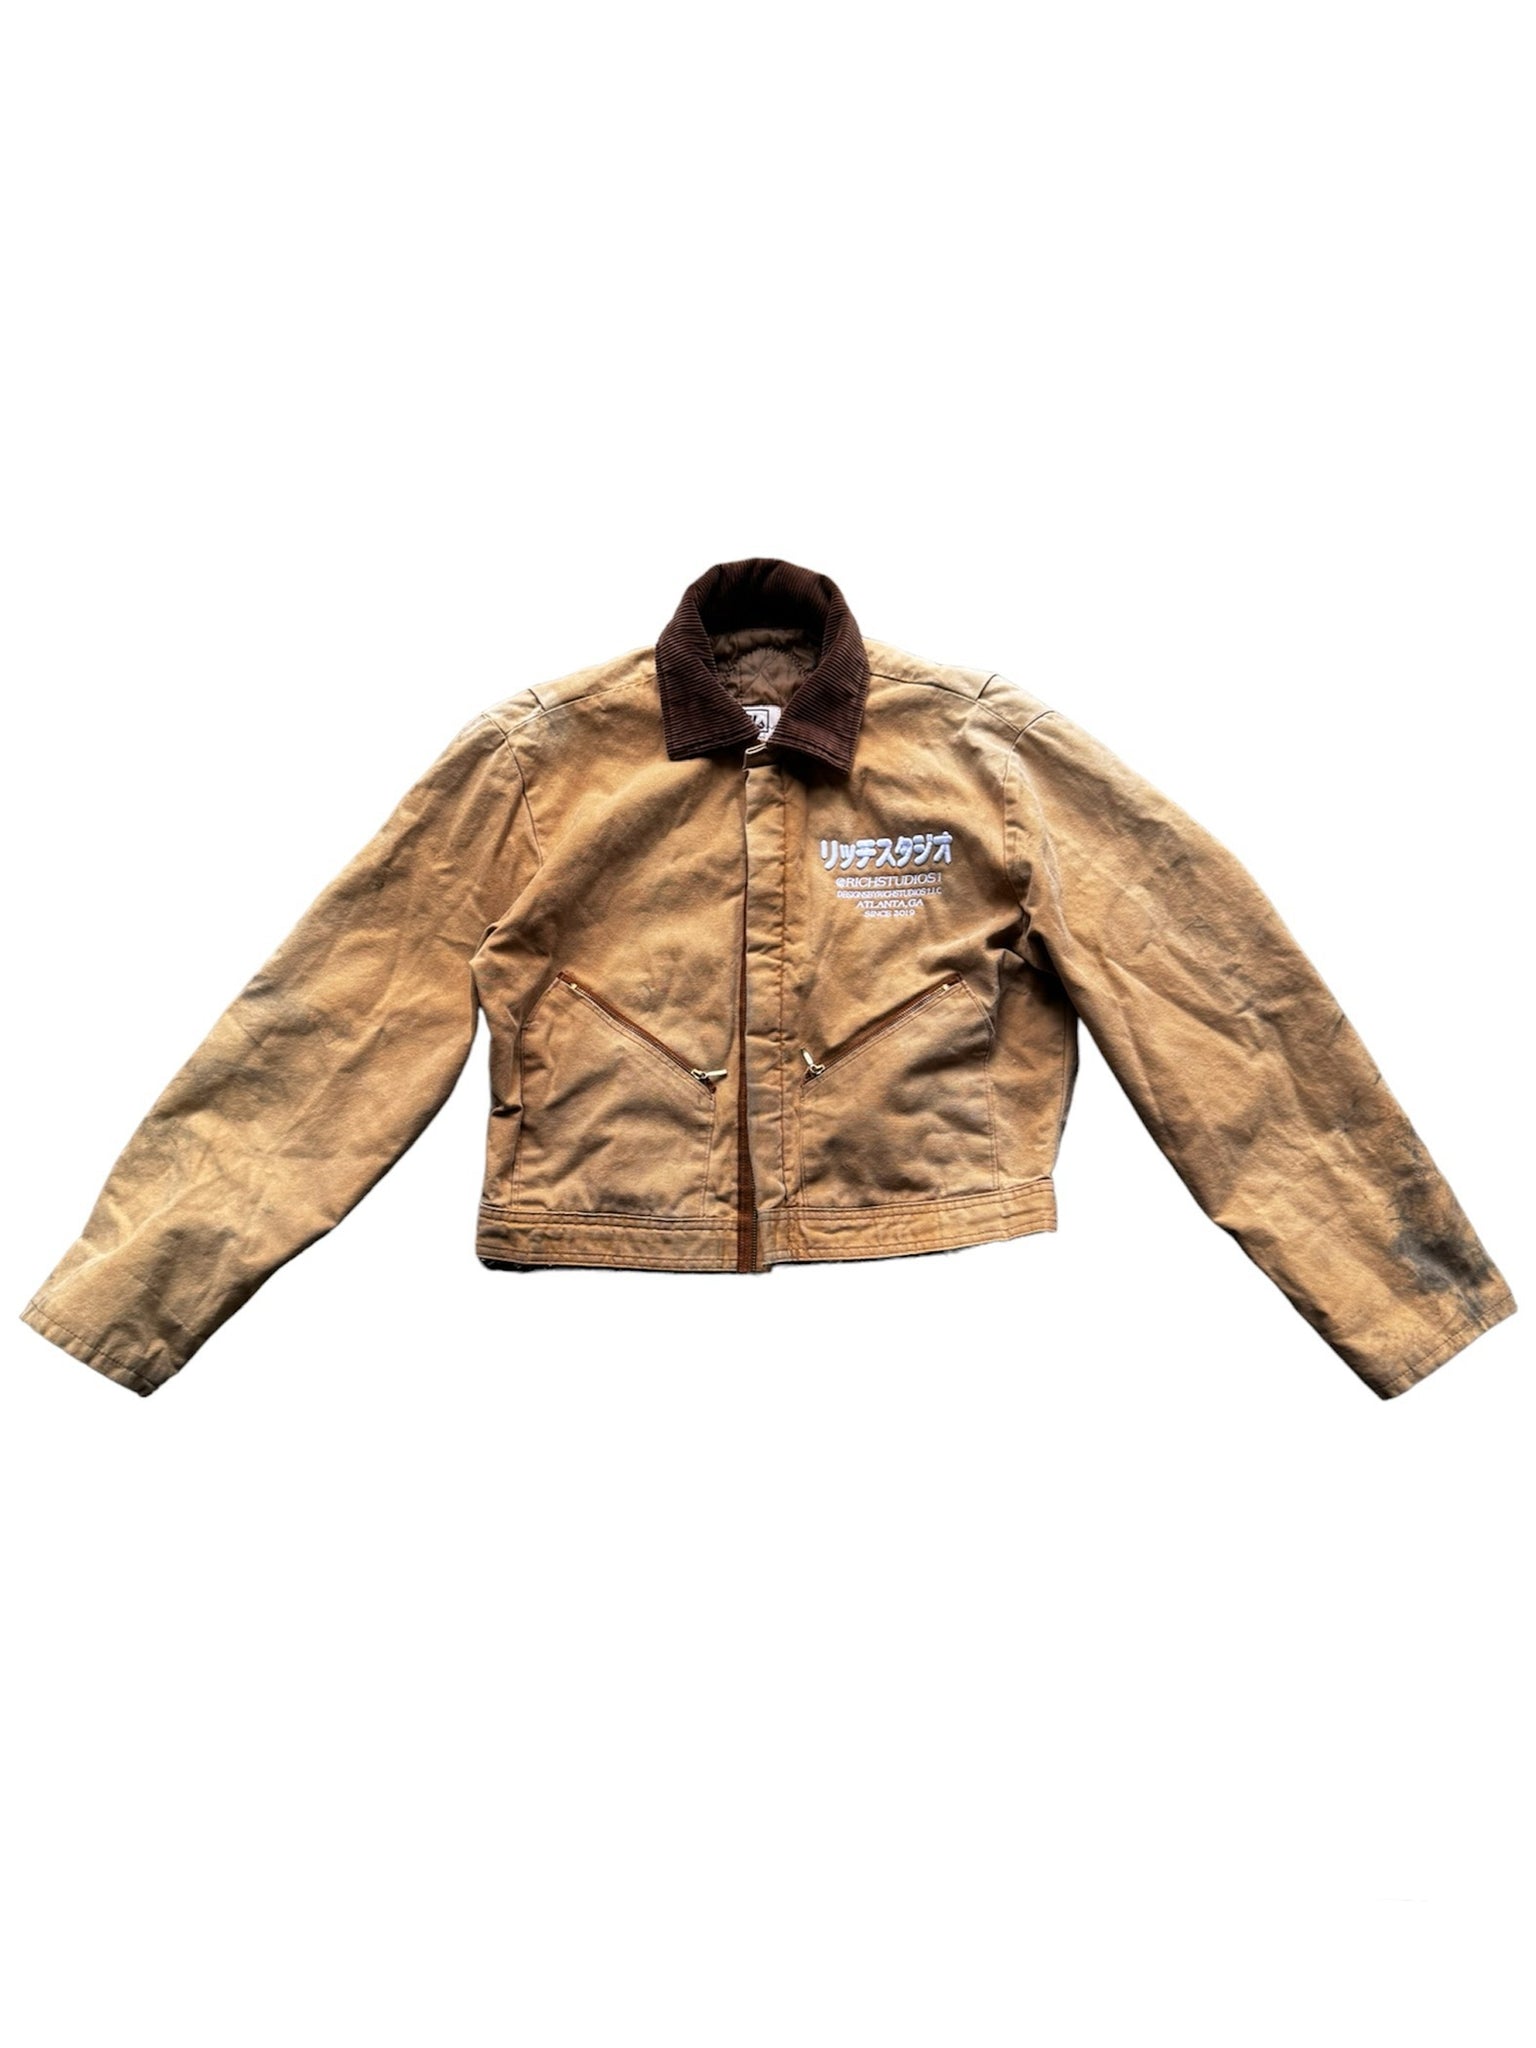 Vintage 70’s Reworked Scout Master Work Jacket (Medium)